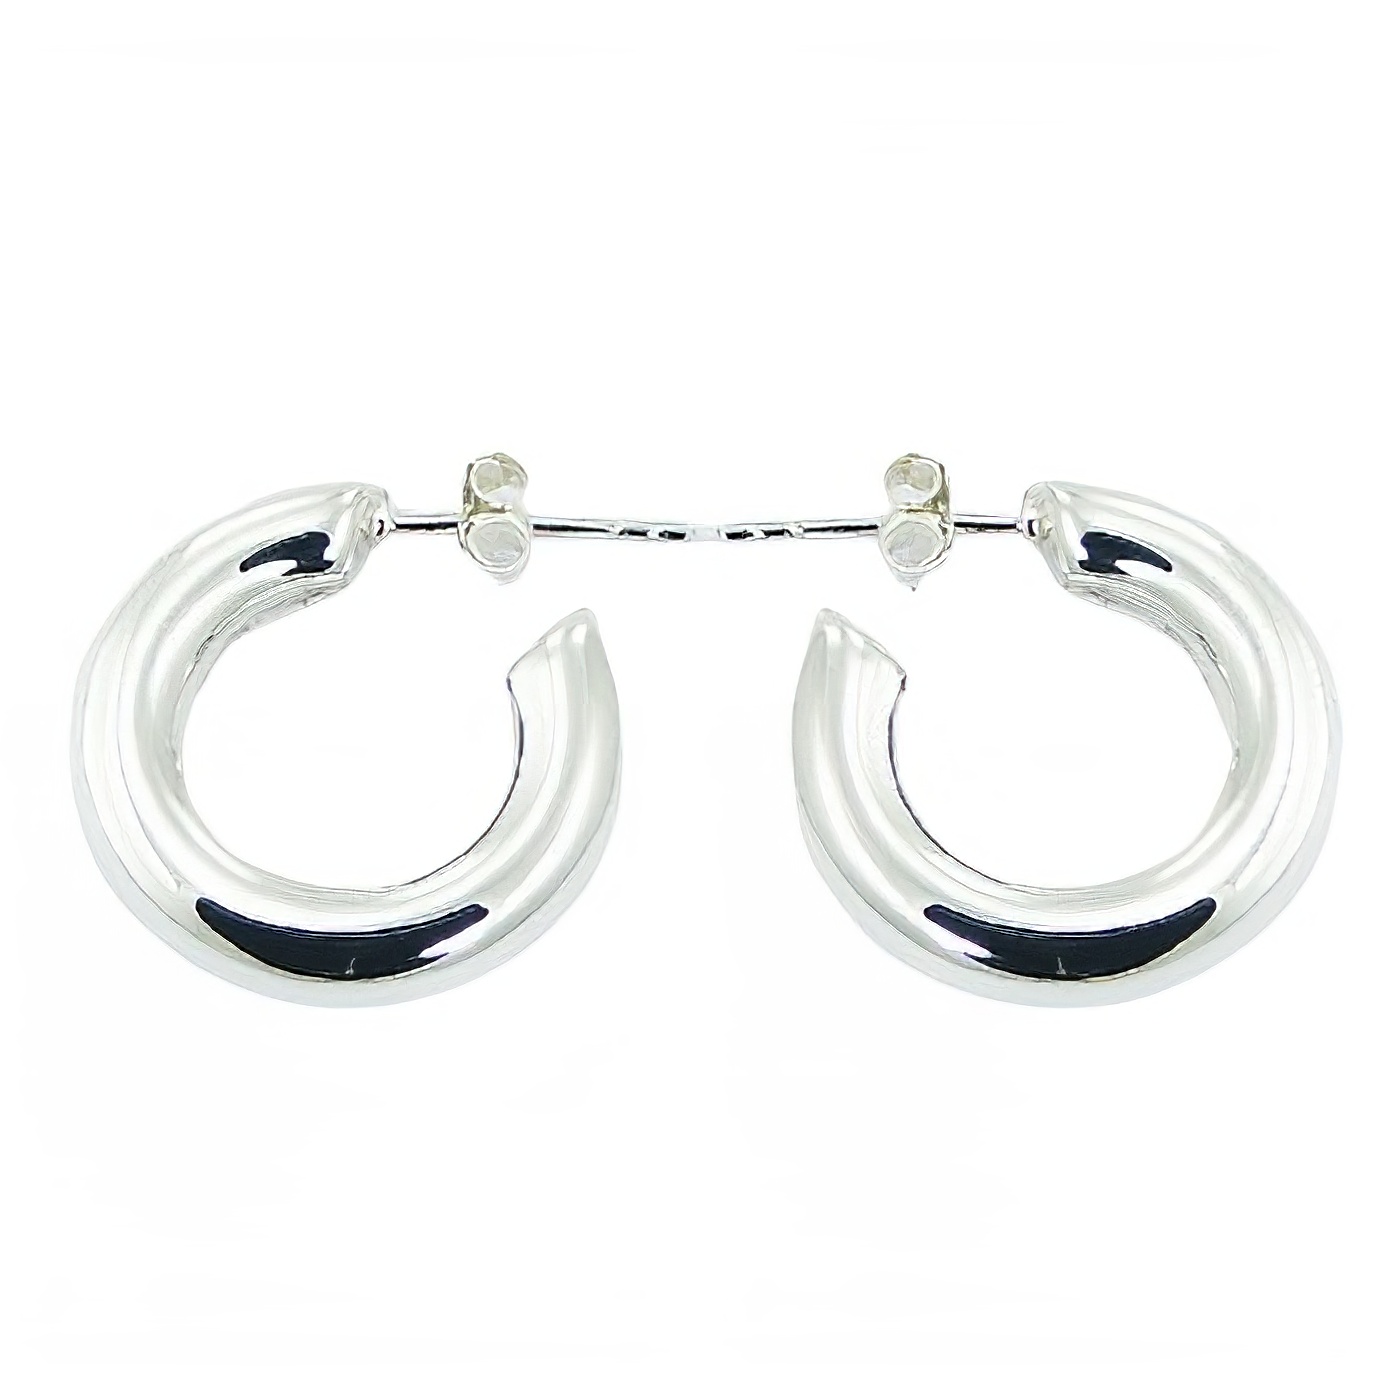 Round Tubular Sterling Silver Stud Earrings by BeYindi 